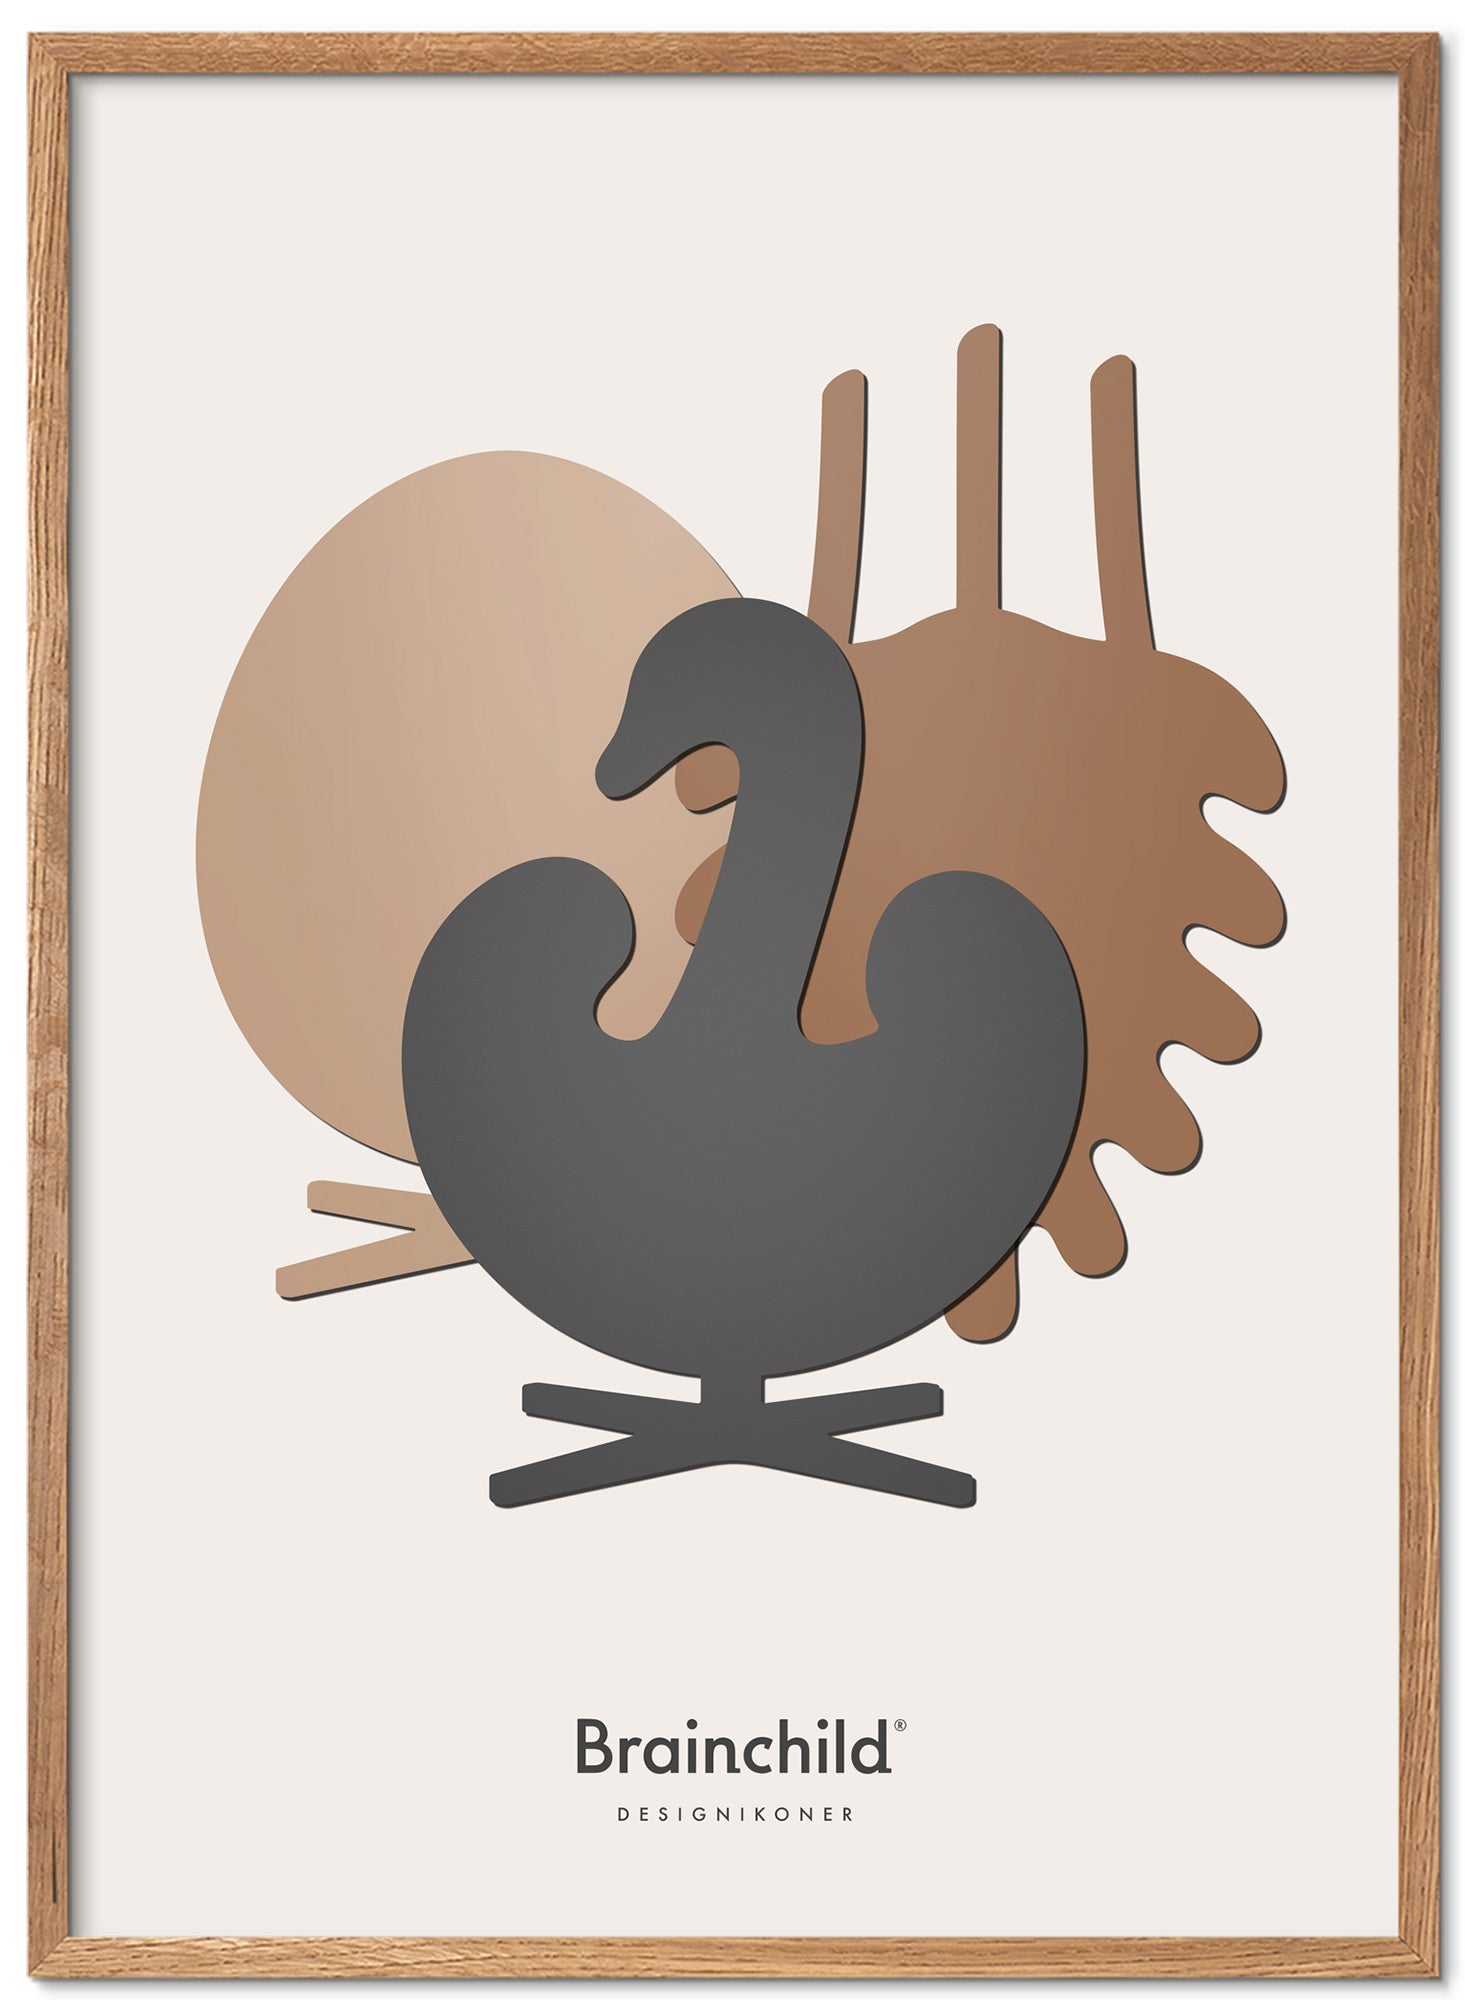 Brainchild Design Icons Poster Symphony Frame Made Of Light Wood A5, Light Grey